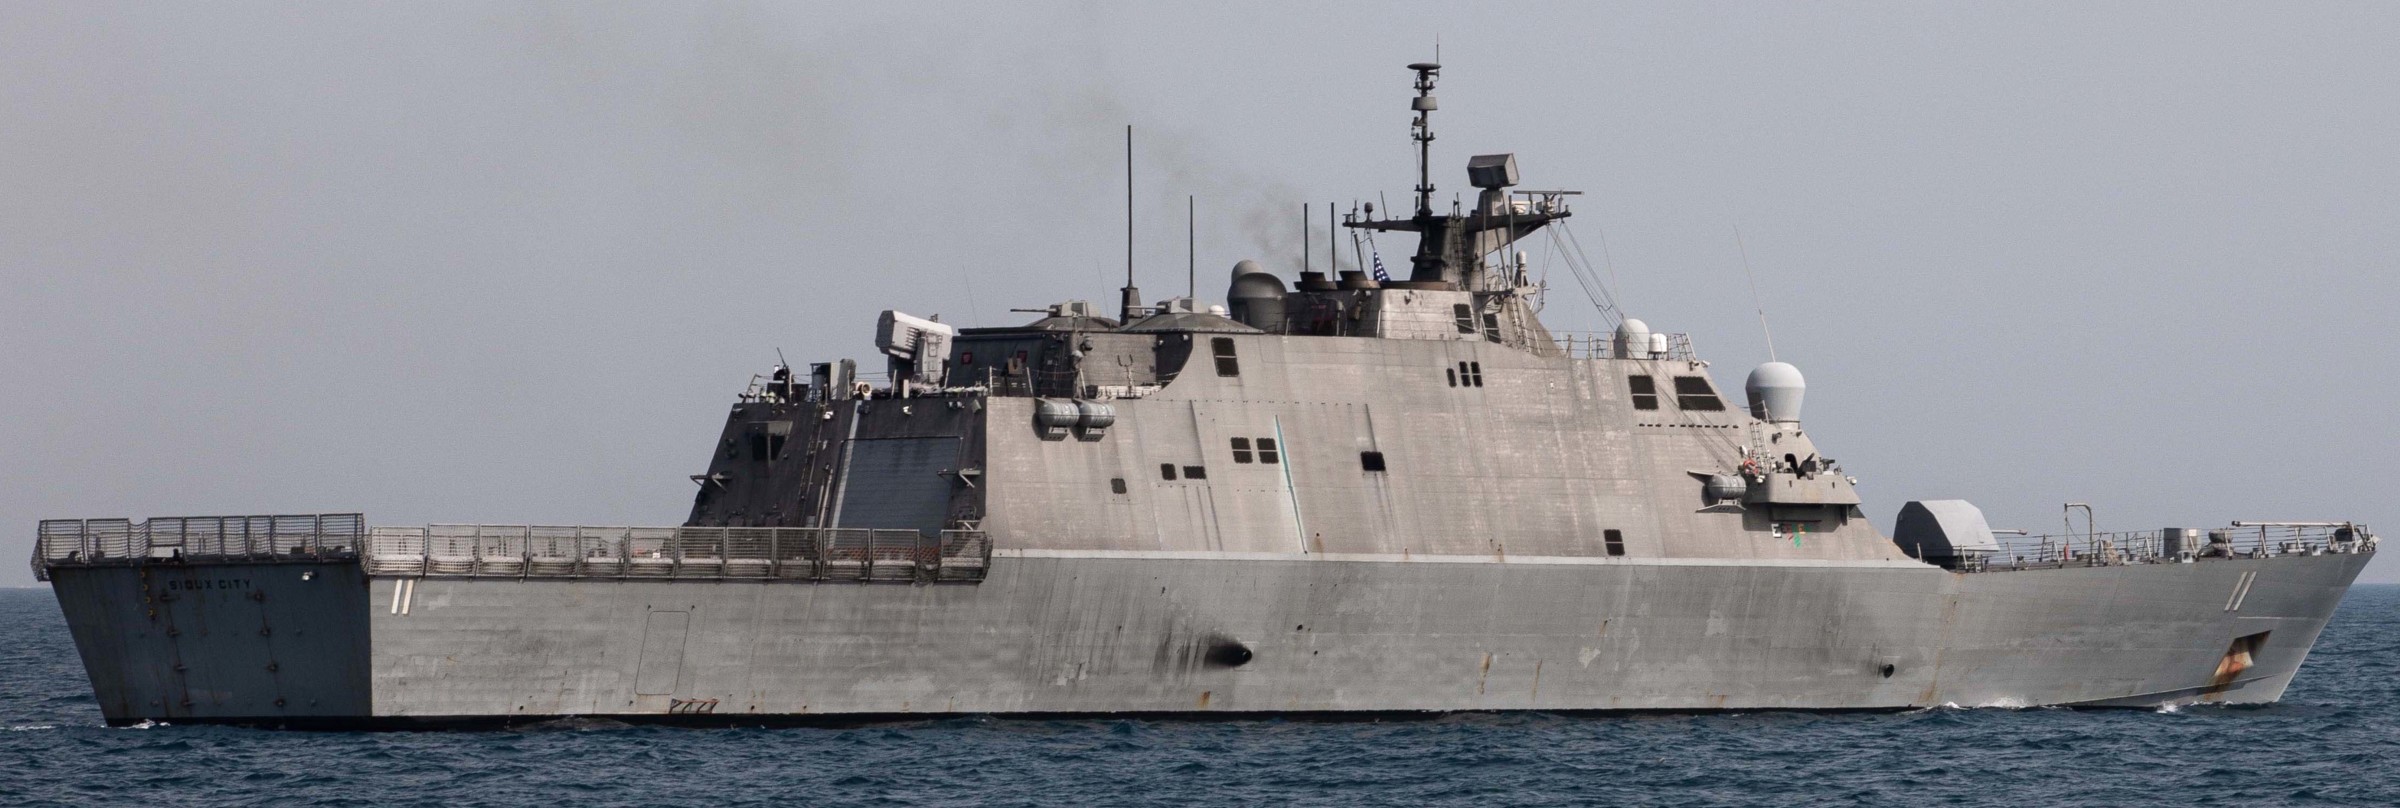 lcs-11 uss sioux city freedom class littoral combat ship us navy arabian gulf persian 99